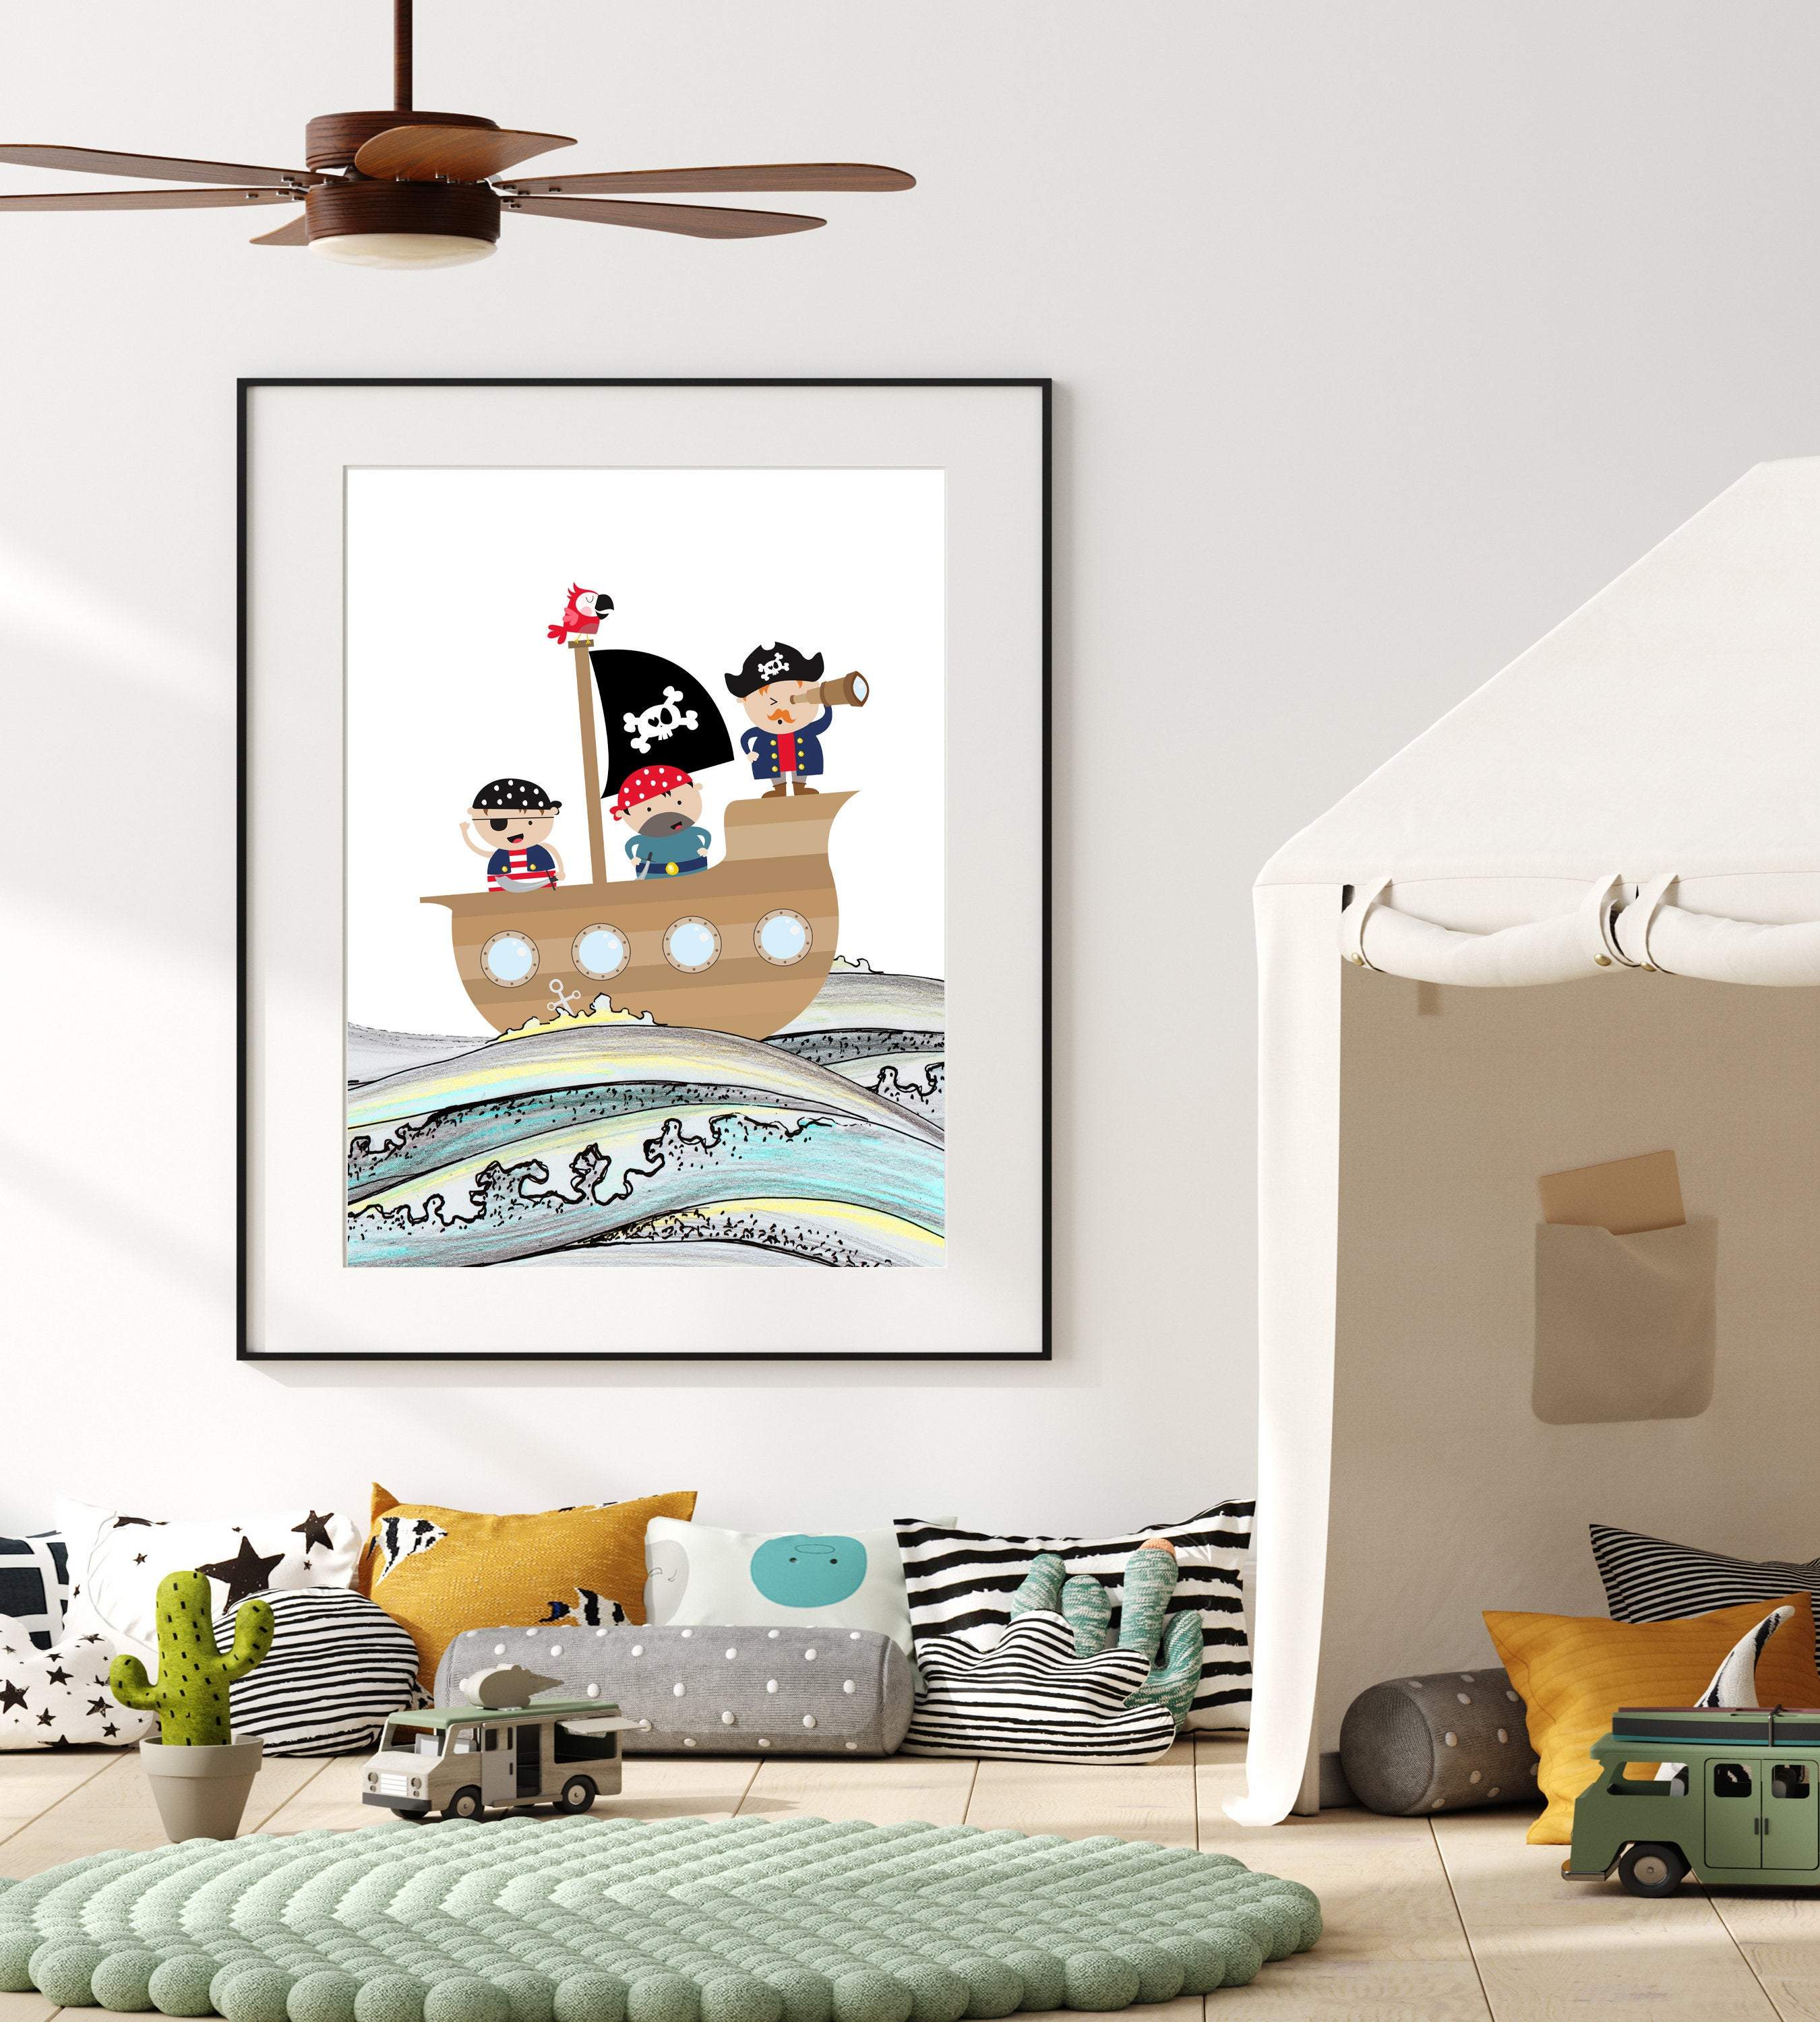 Pirates on a Pirate Ship nursery art print baby nursery bedroom decor